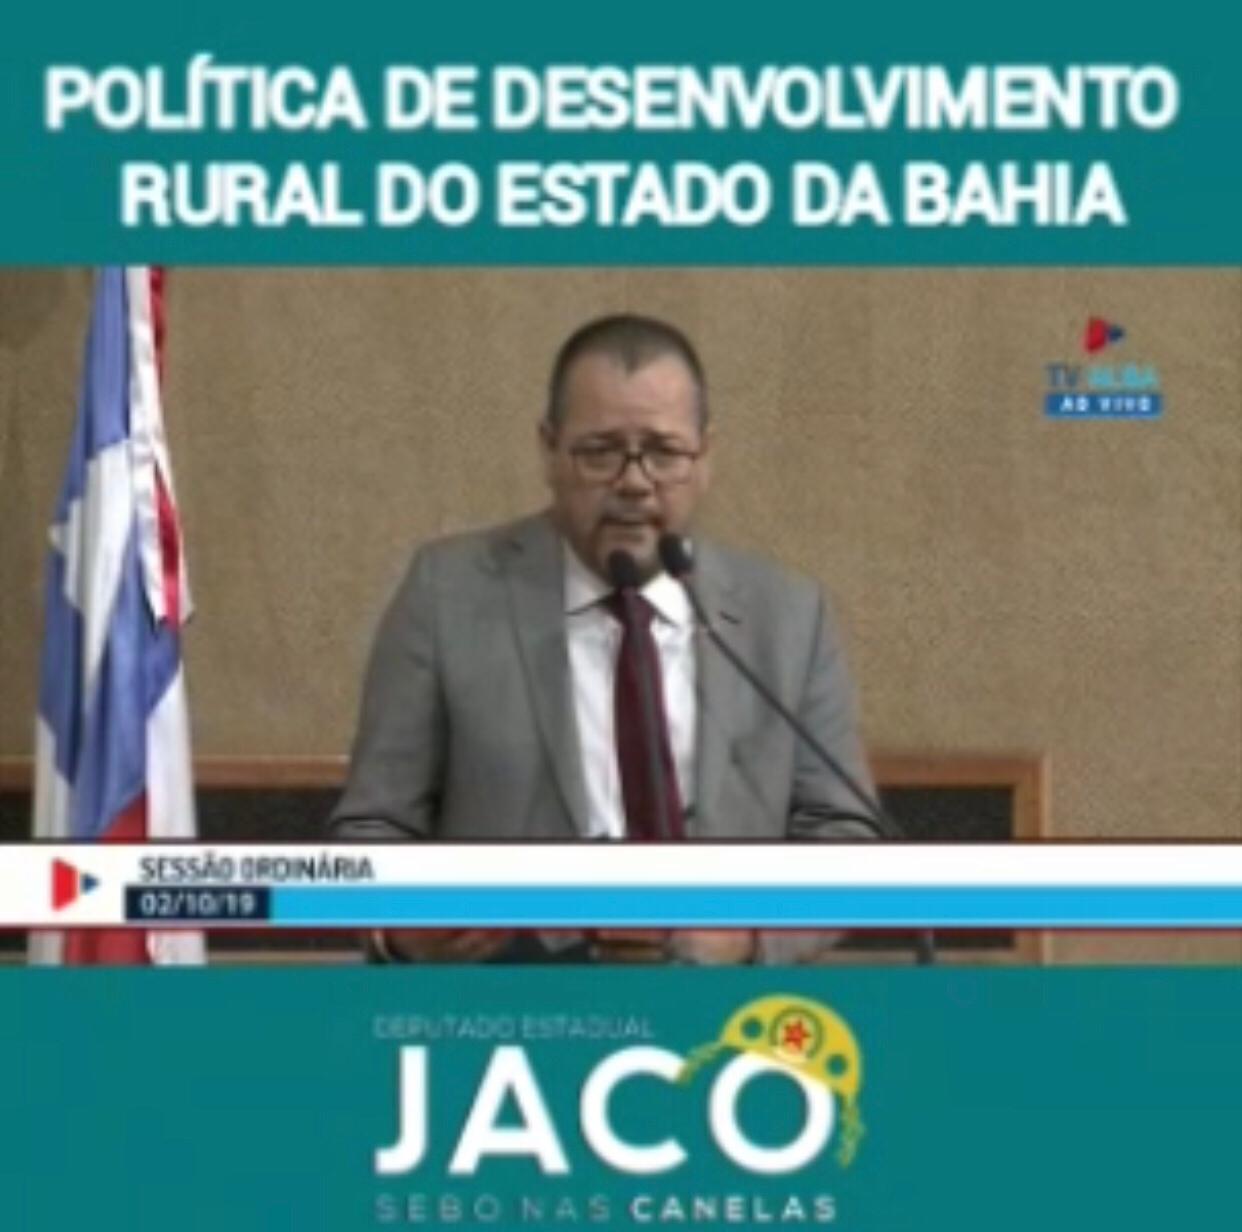 Deputado Jacó Defende O Desenvolvimento Rural